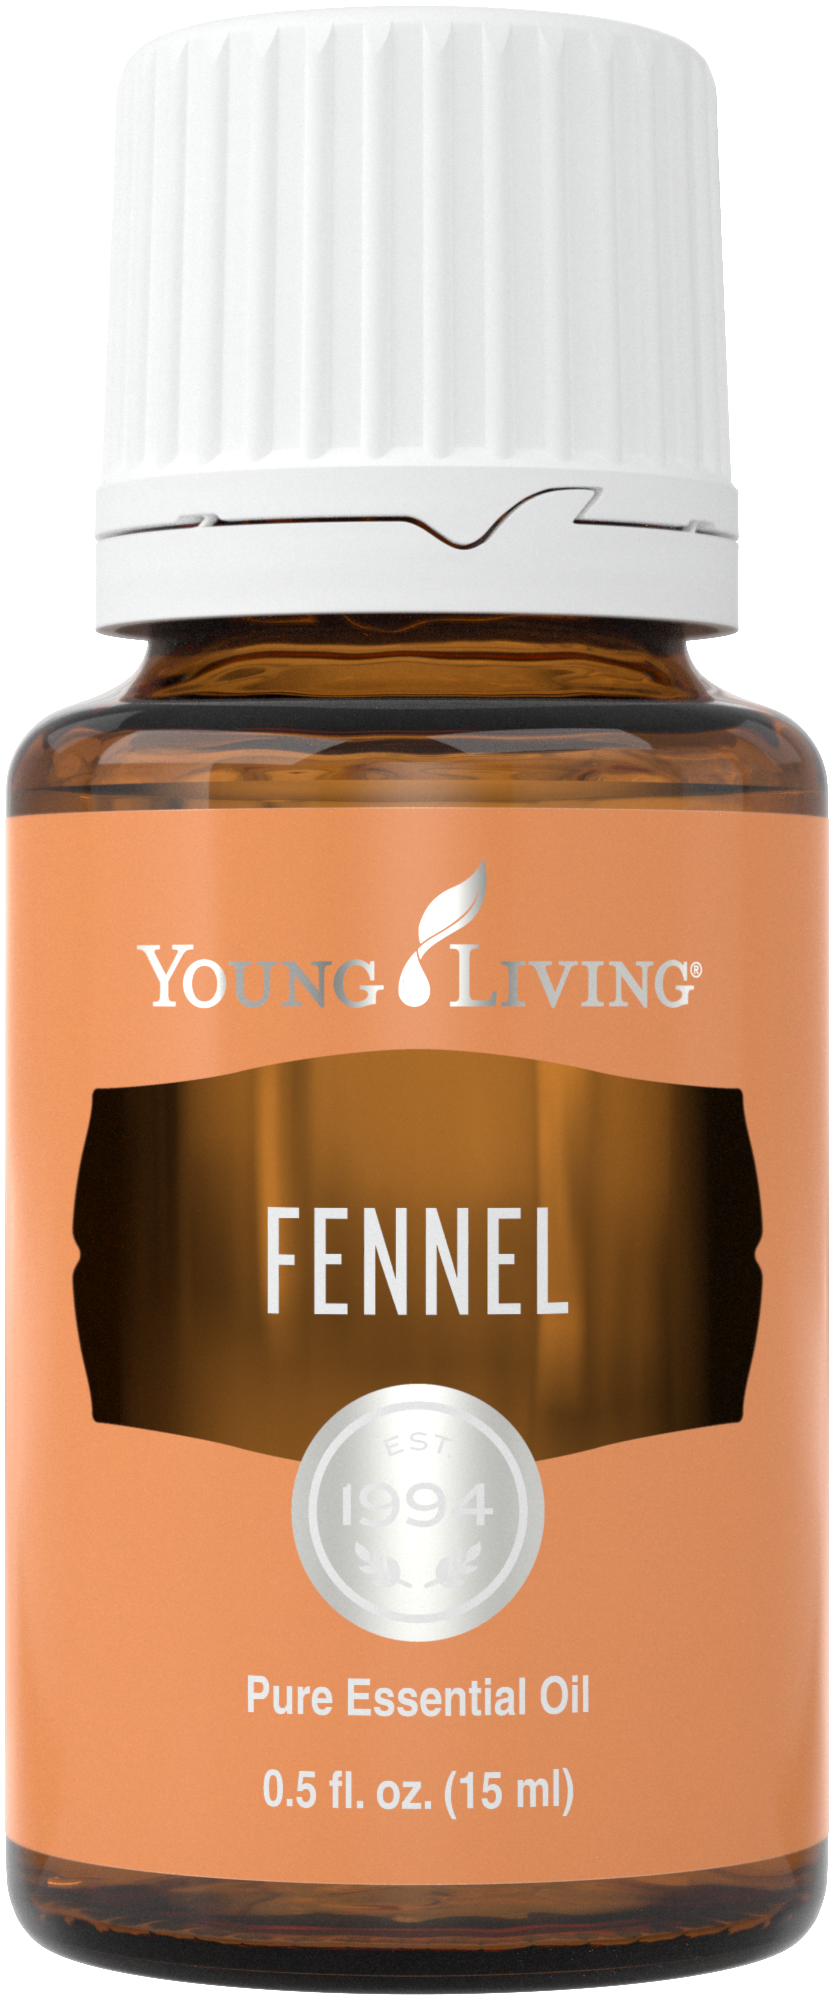 Fennel essential oil 